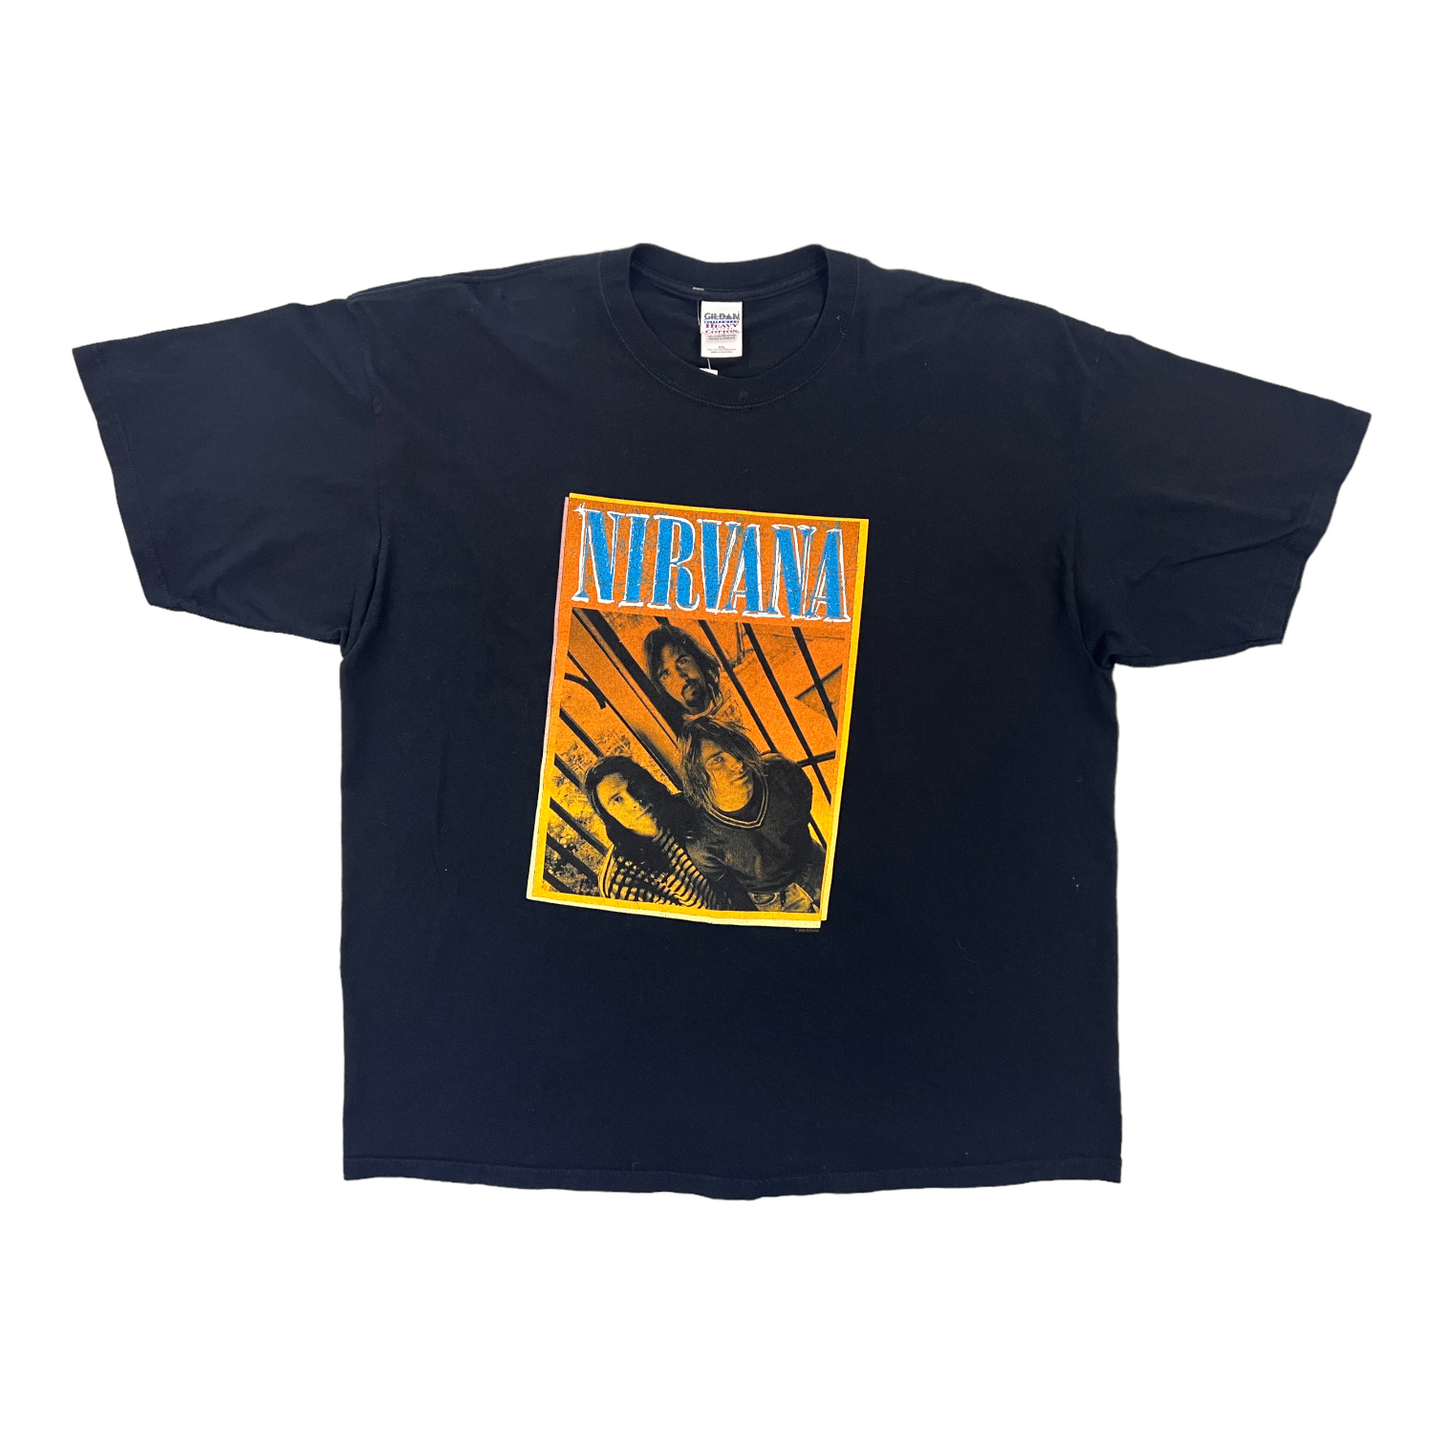 2004 Nirvana album vintage Shirt